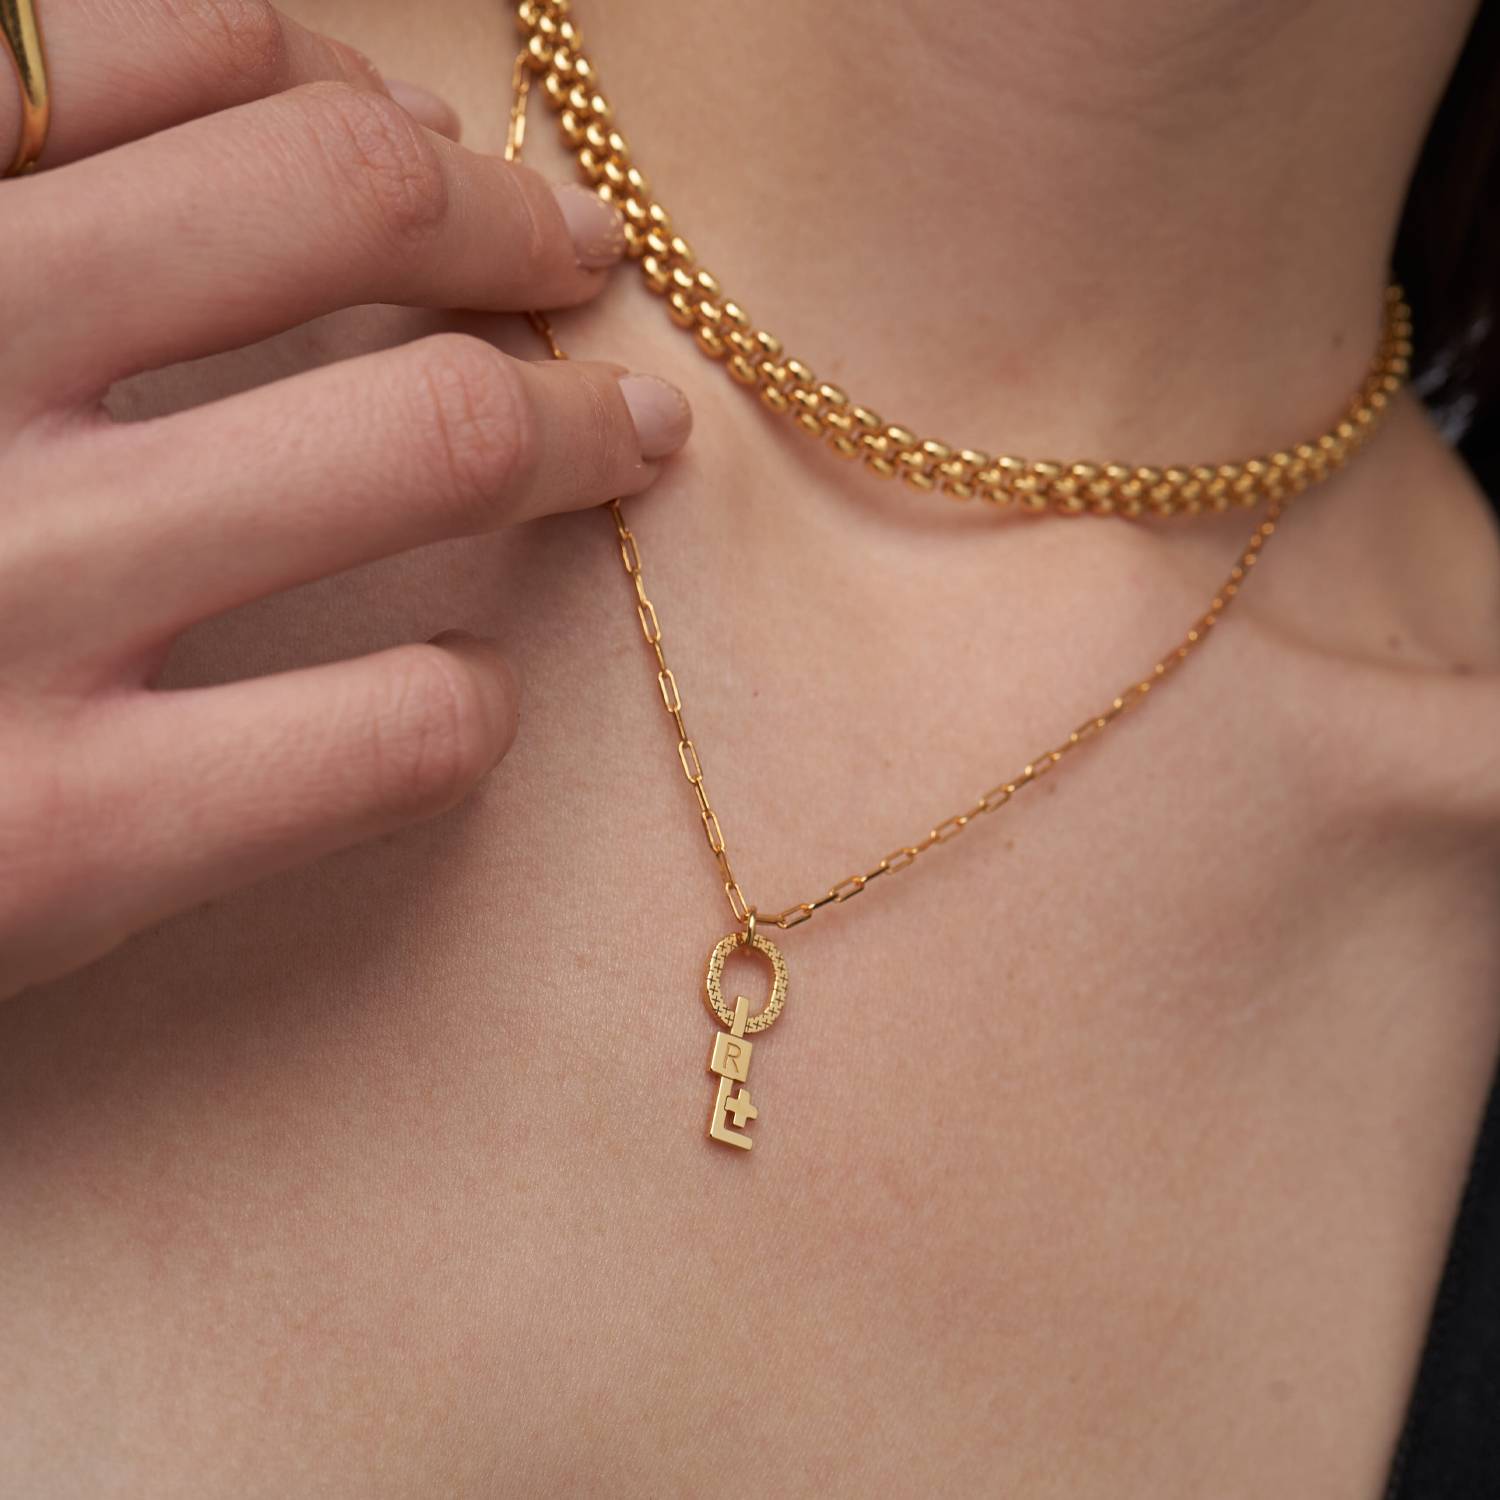 Oak&luna Engraved Key Charm Necklace - 14K Solid Gold-1 product photo